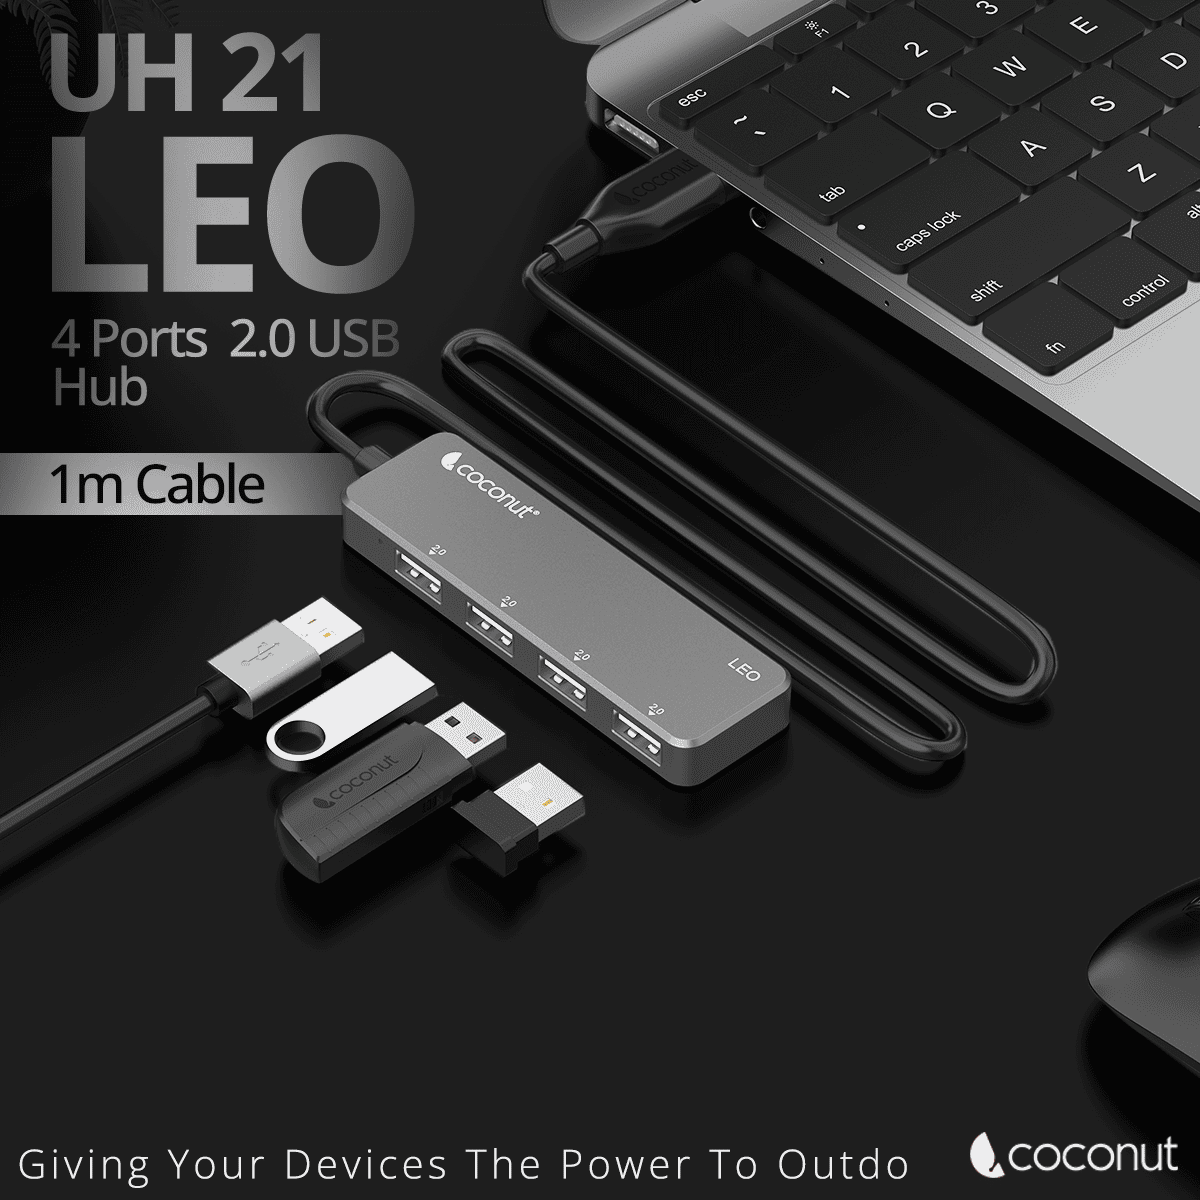 UH21 Leo 4 Port USB 2.0 Hub, 1M Cable